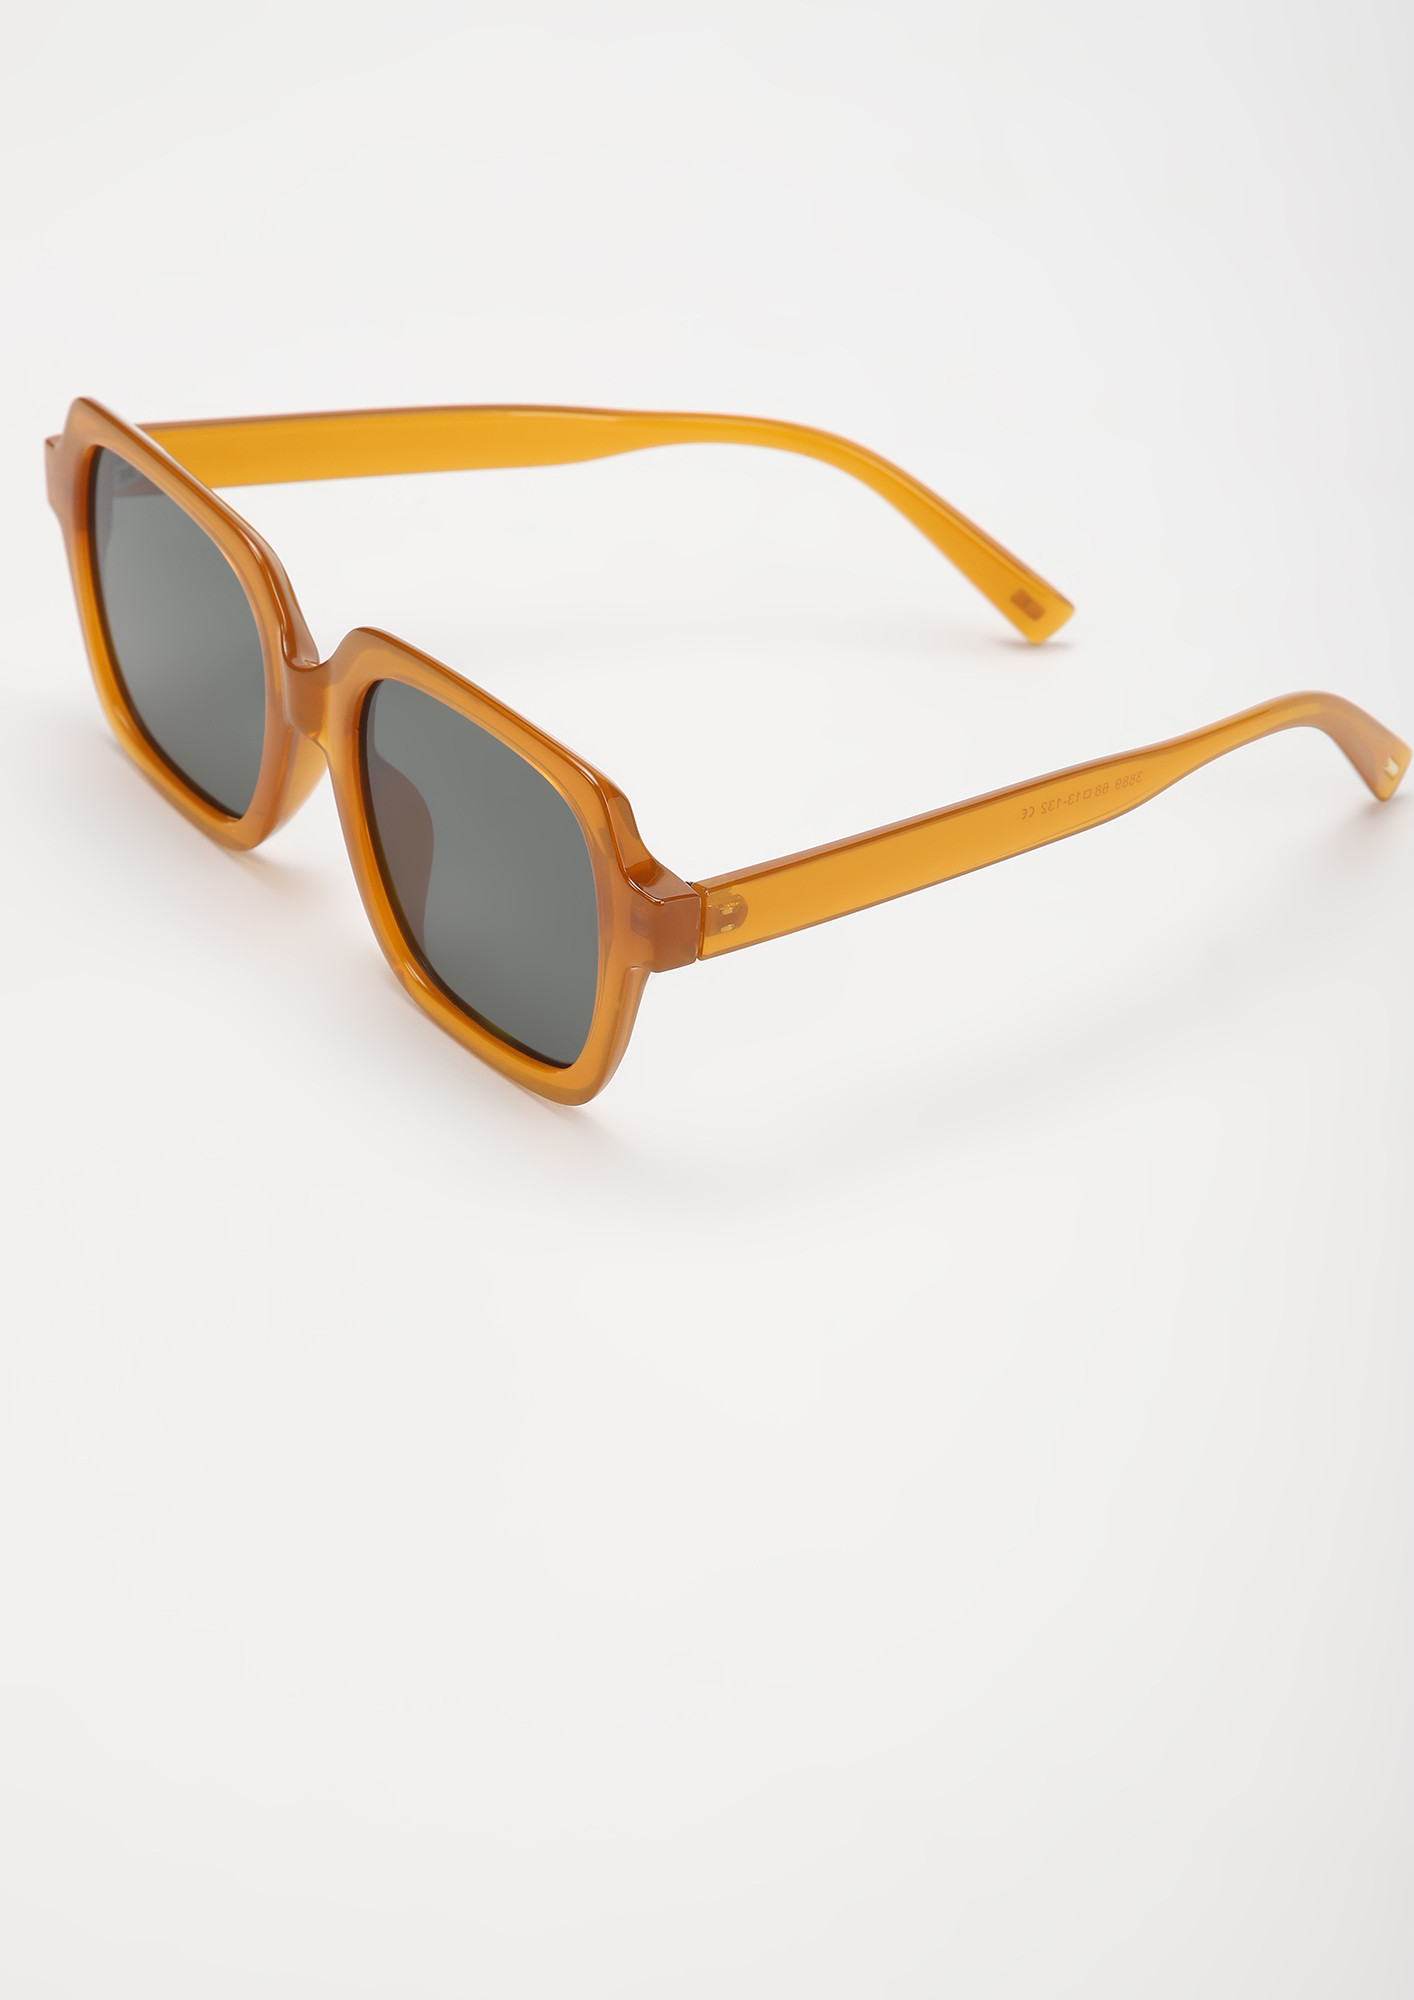 Fendi Fendigraphy 54 Brown & Orange Sunglasses | Sunglass Hut USA